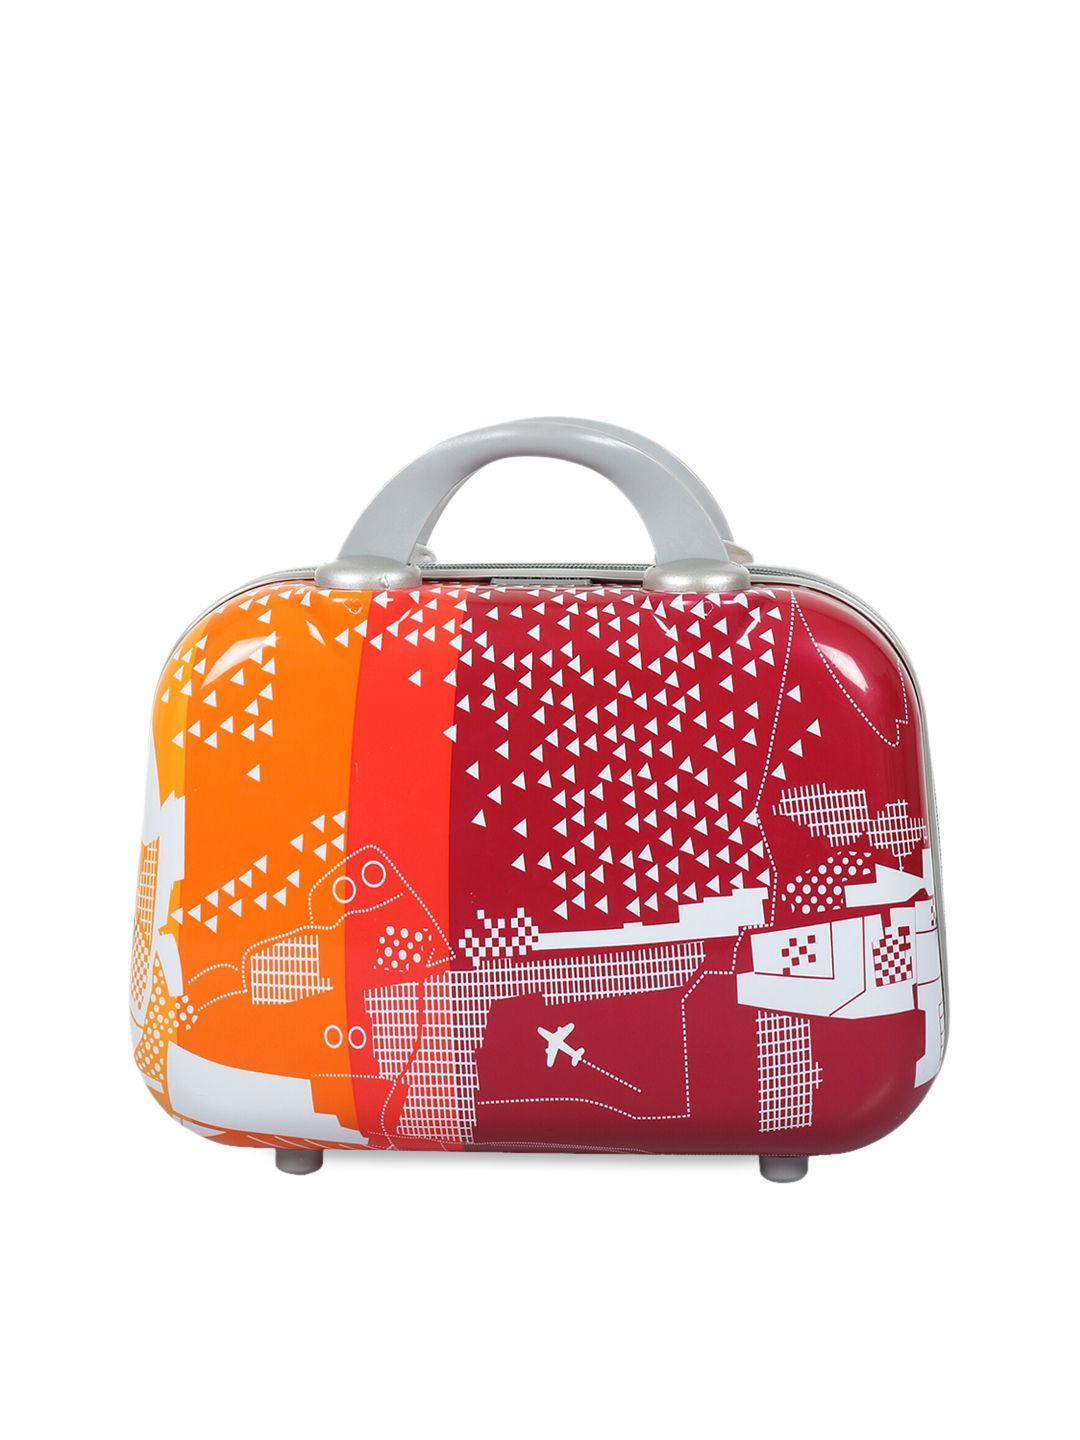 polo class unisex small red & orange vanity bag